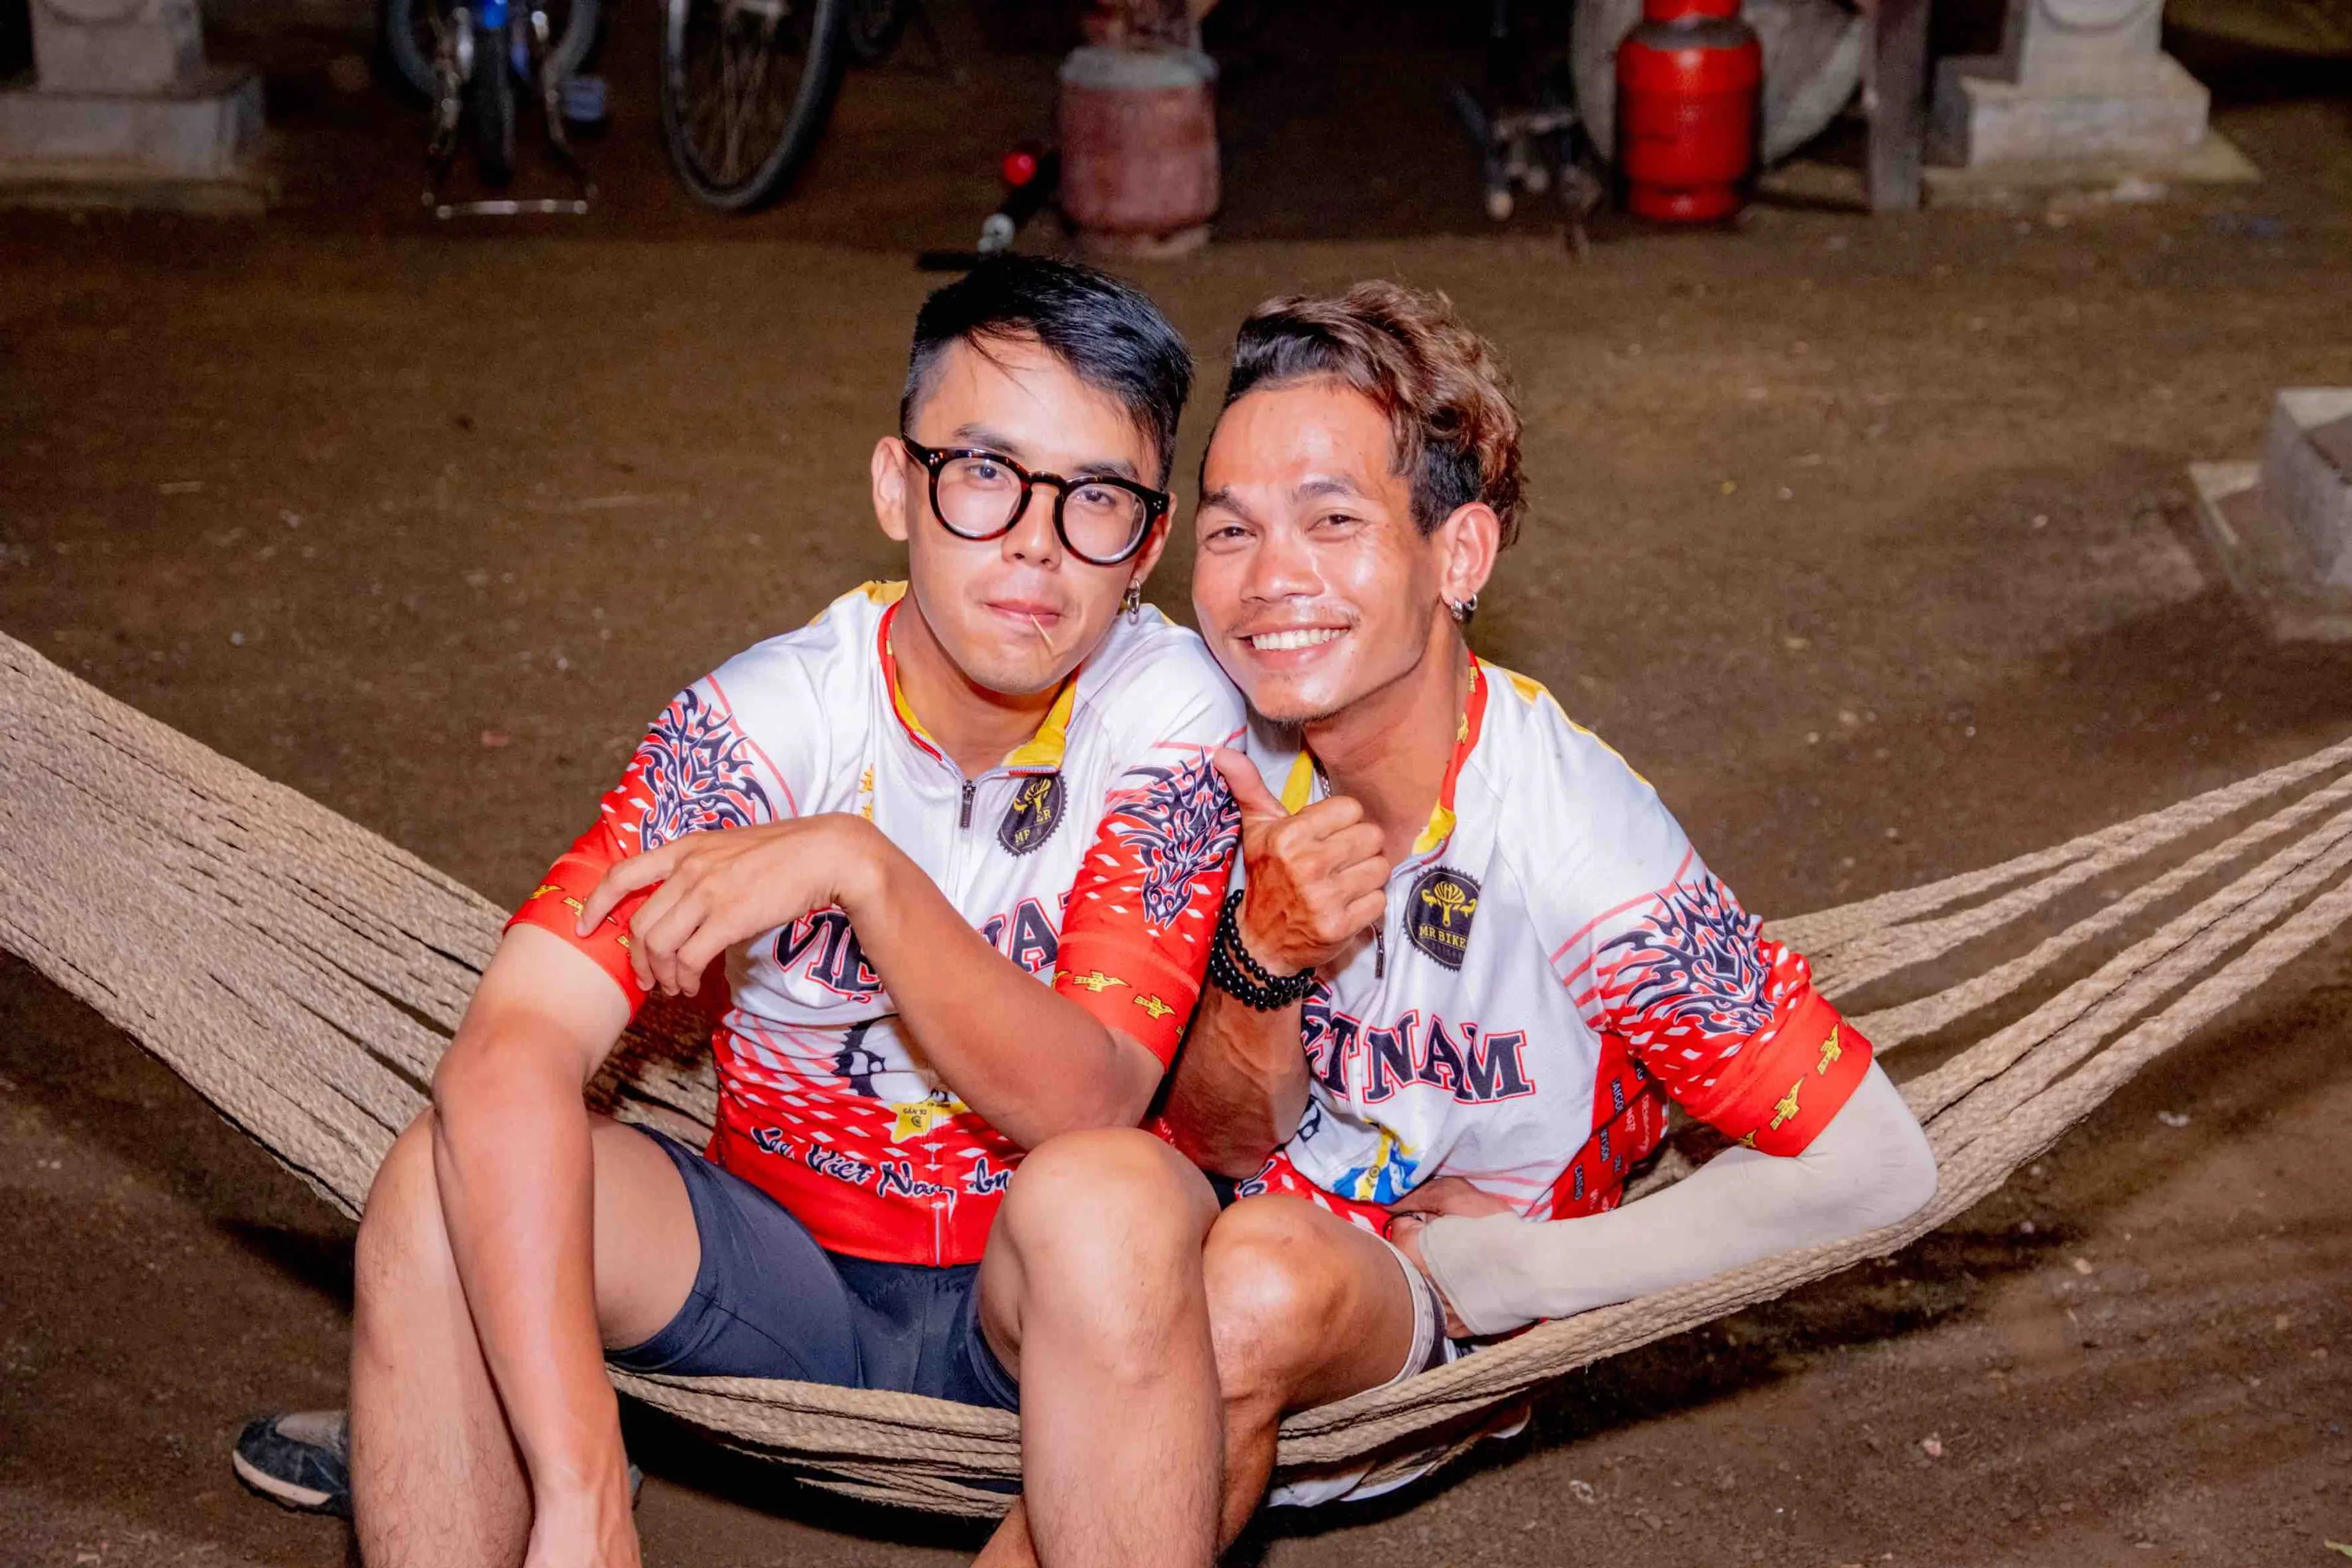 Mr Biker Saigon, Cycling Vietnam and Cambodia